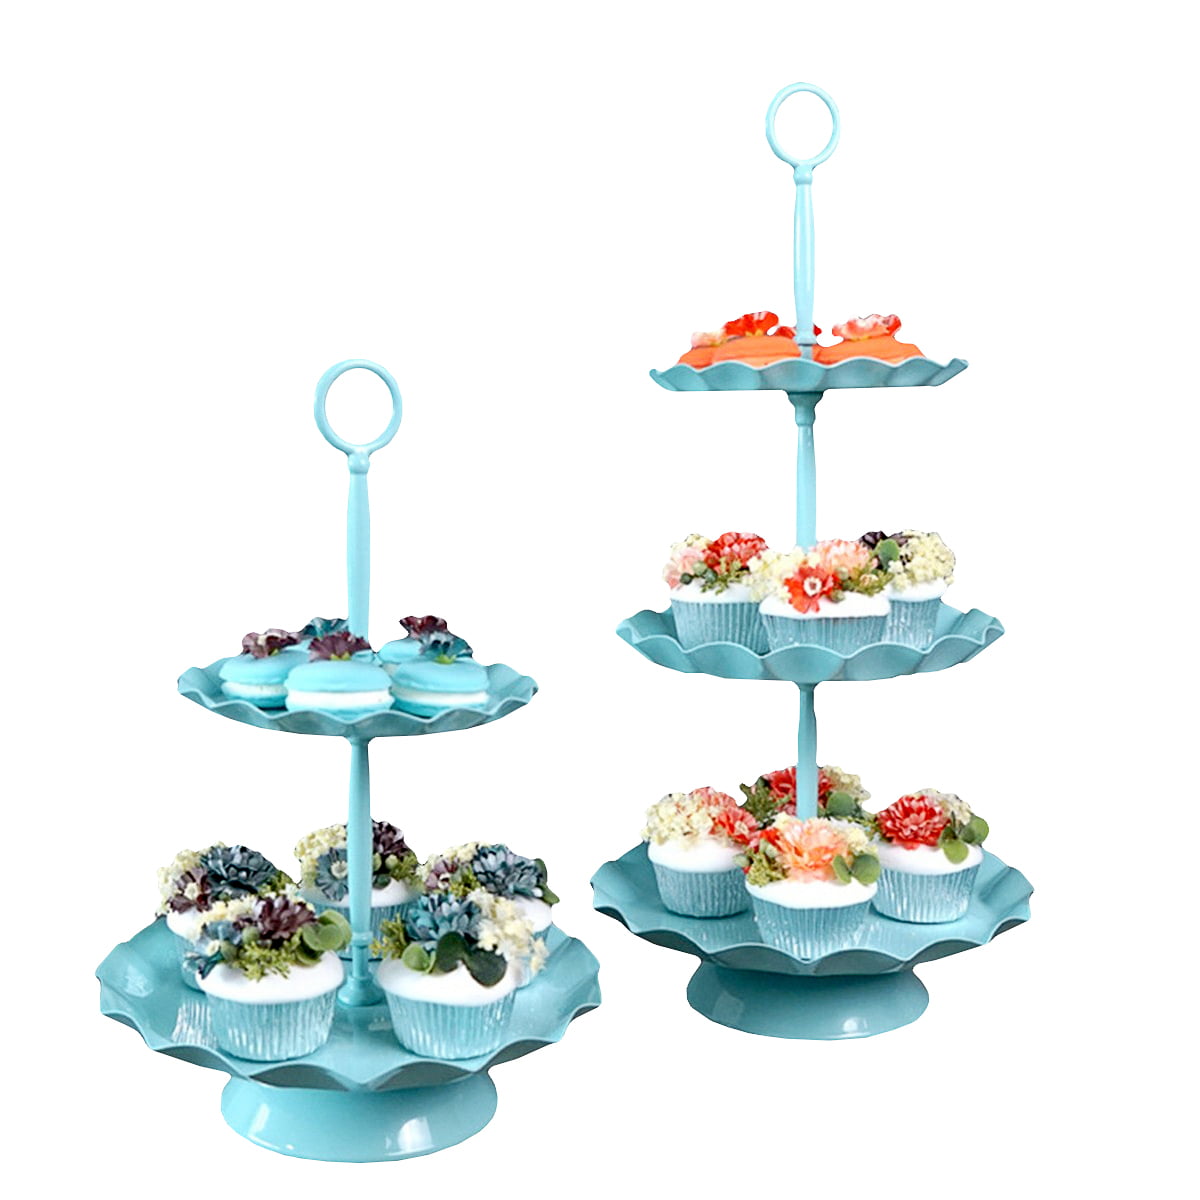 Ceramic Cupcake Stand With Blue Rose Design